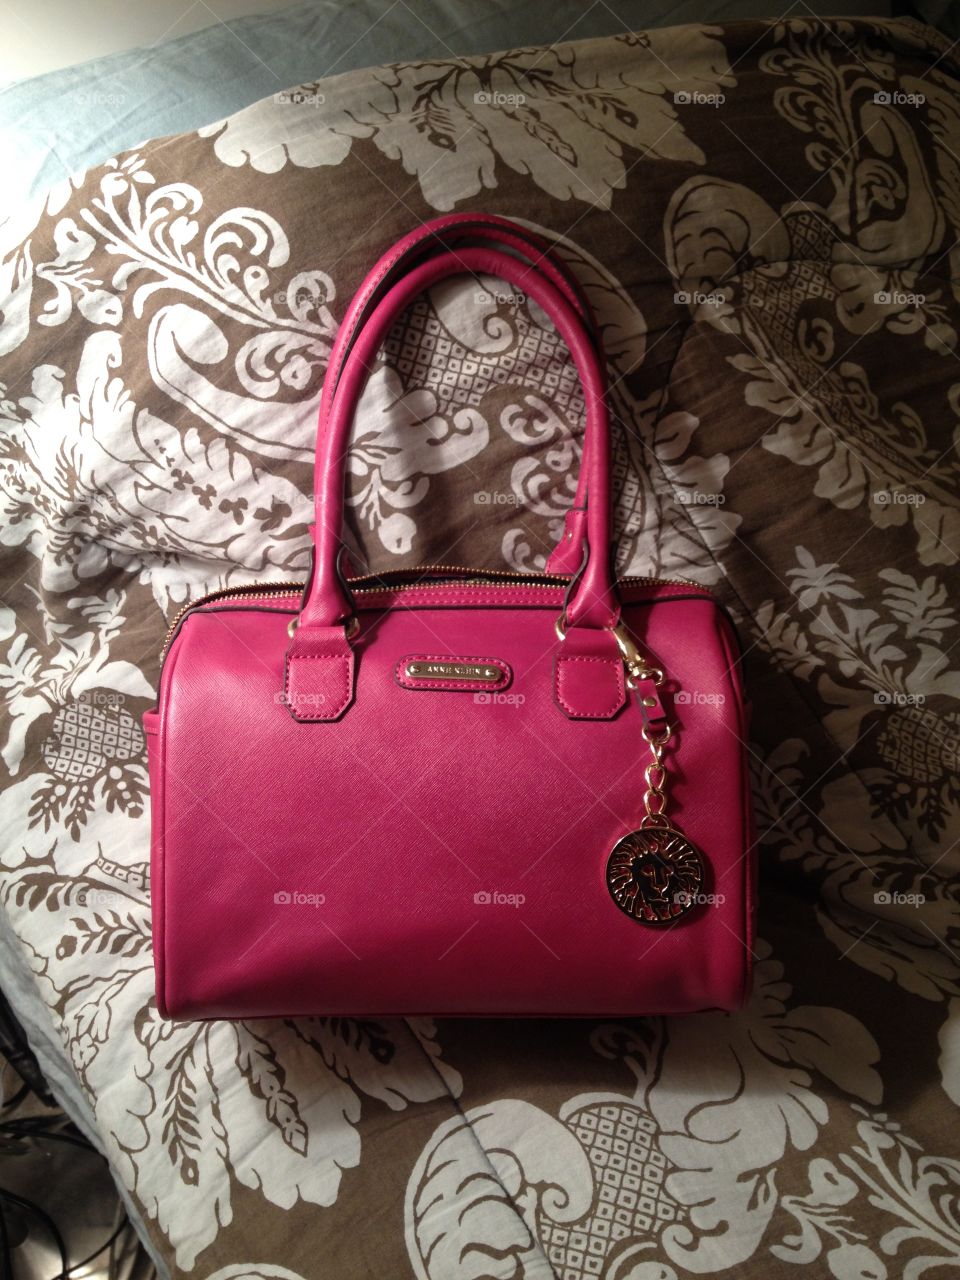 Purse
Handbag
Anne Klein
Pink
Purple
Fuscia
Hobo
